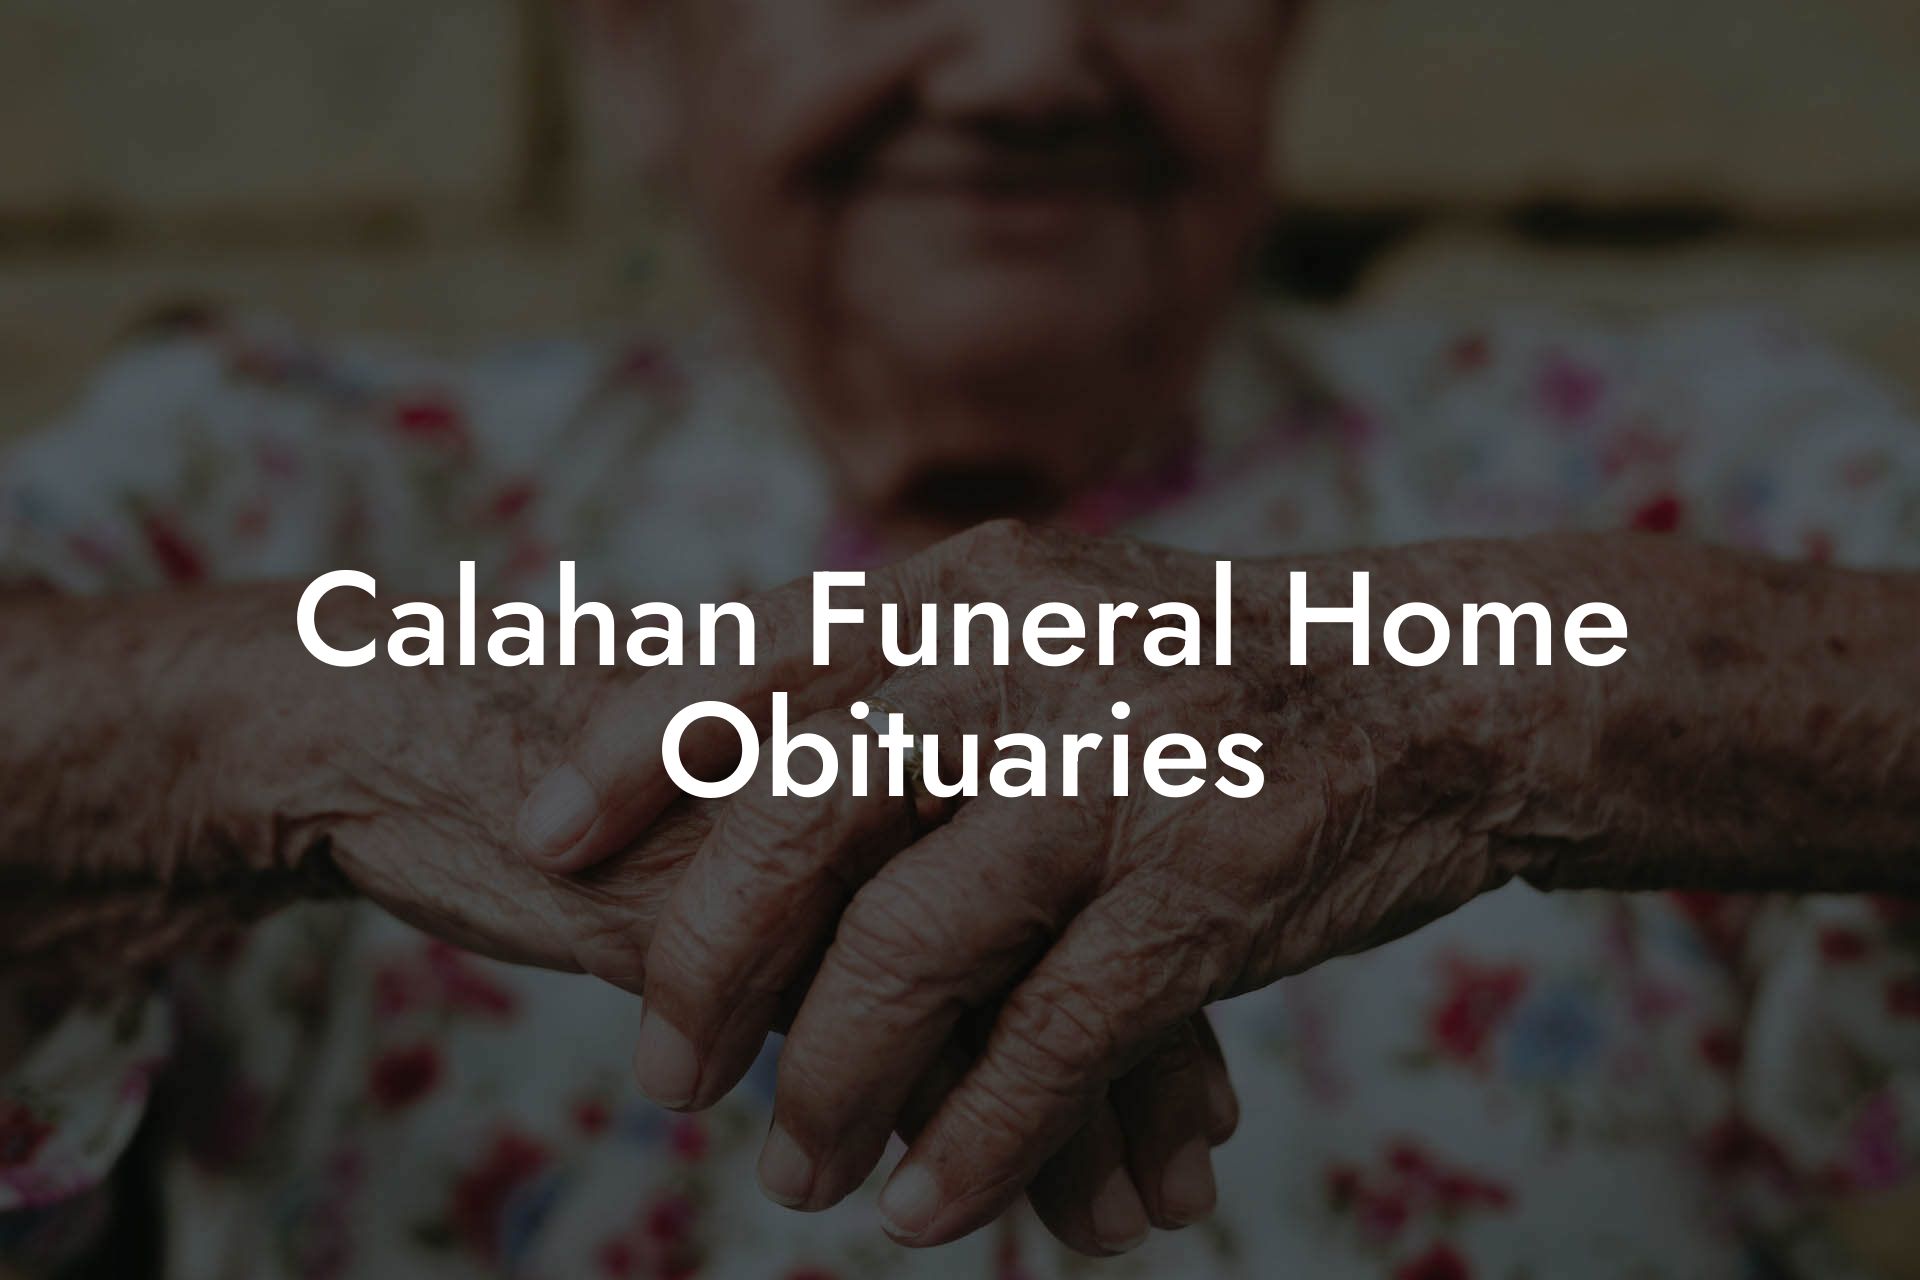 Calahan Funeral Home Obituaries